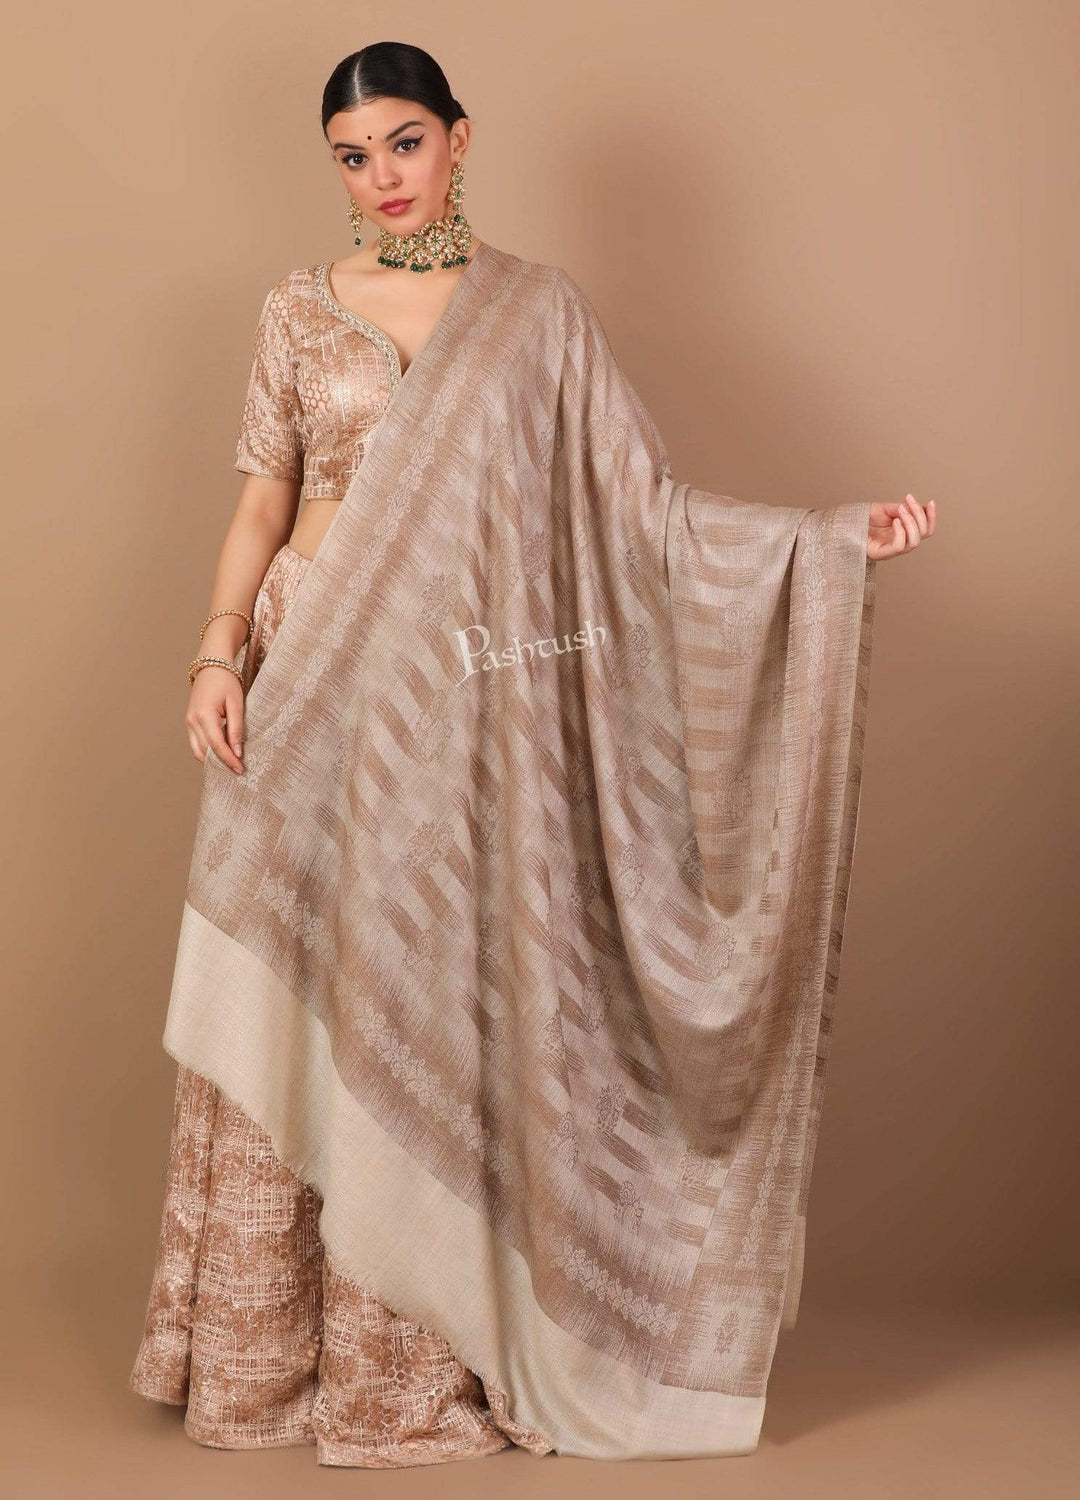 Pashtush India 70x200 Pashtush Womens Woven Paisley, Self Shawl, in Extra Soft Fine Wool, Large Wrap Size